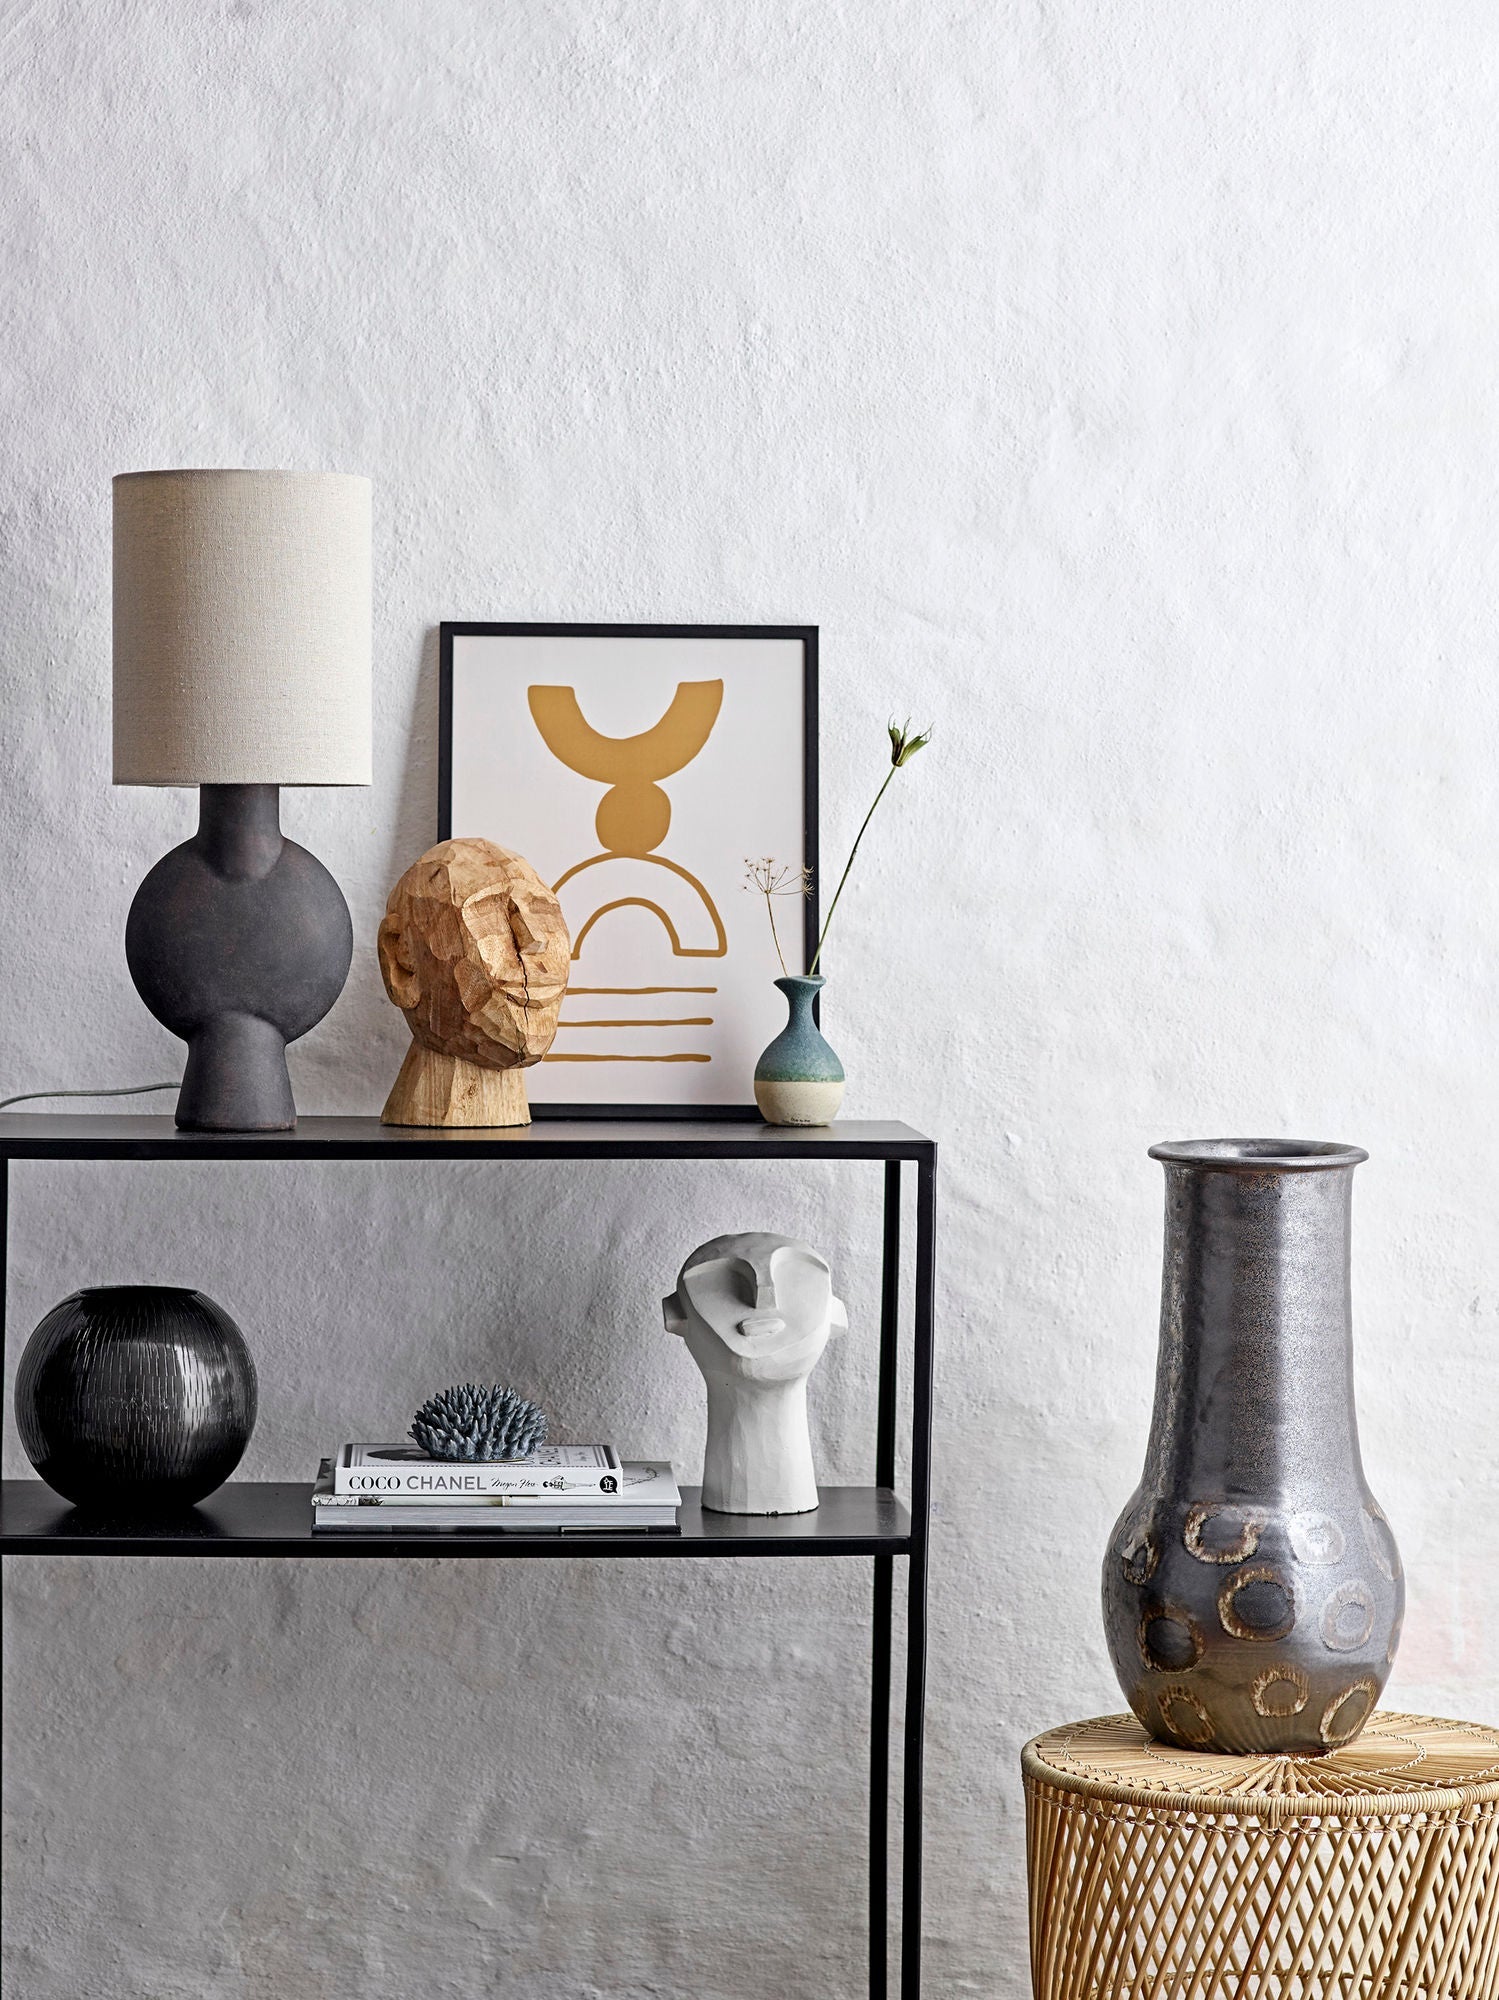 Bloomingville Gorm Deco Vase, Black, Terracotta